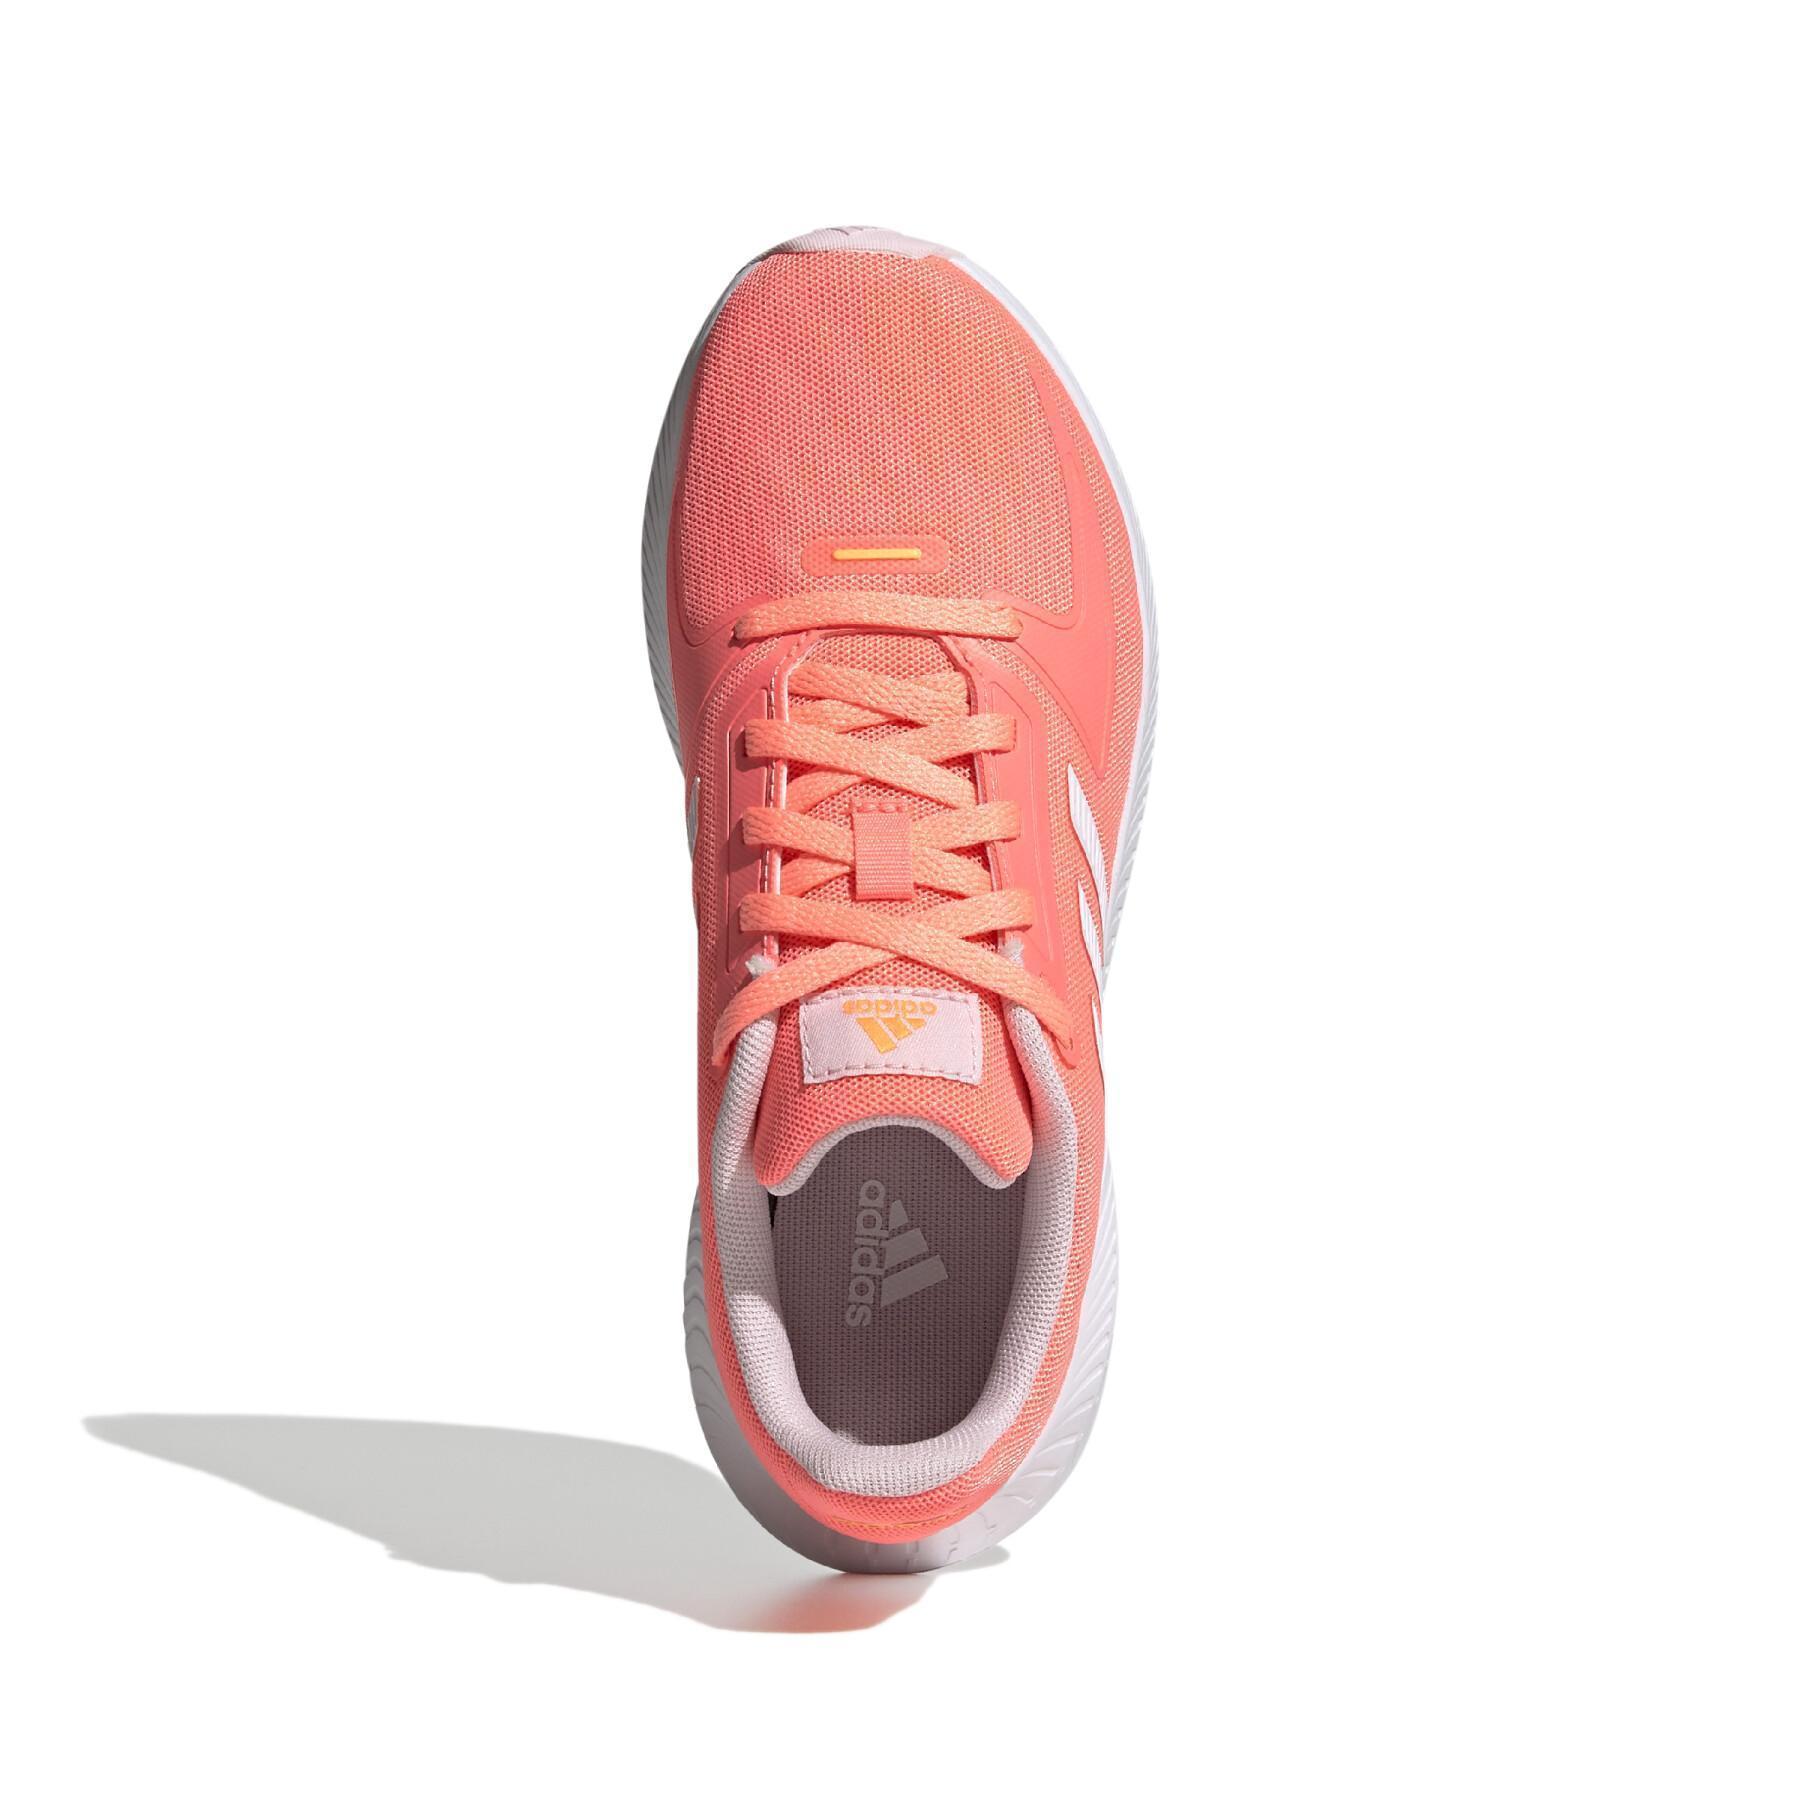 Chaussures de running enfant adidas Runfalcon 2.0